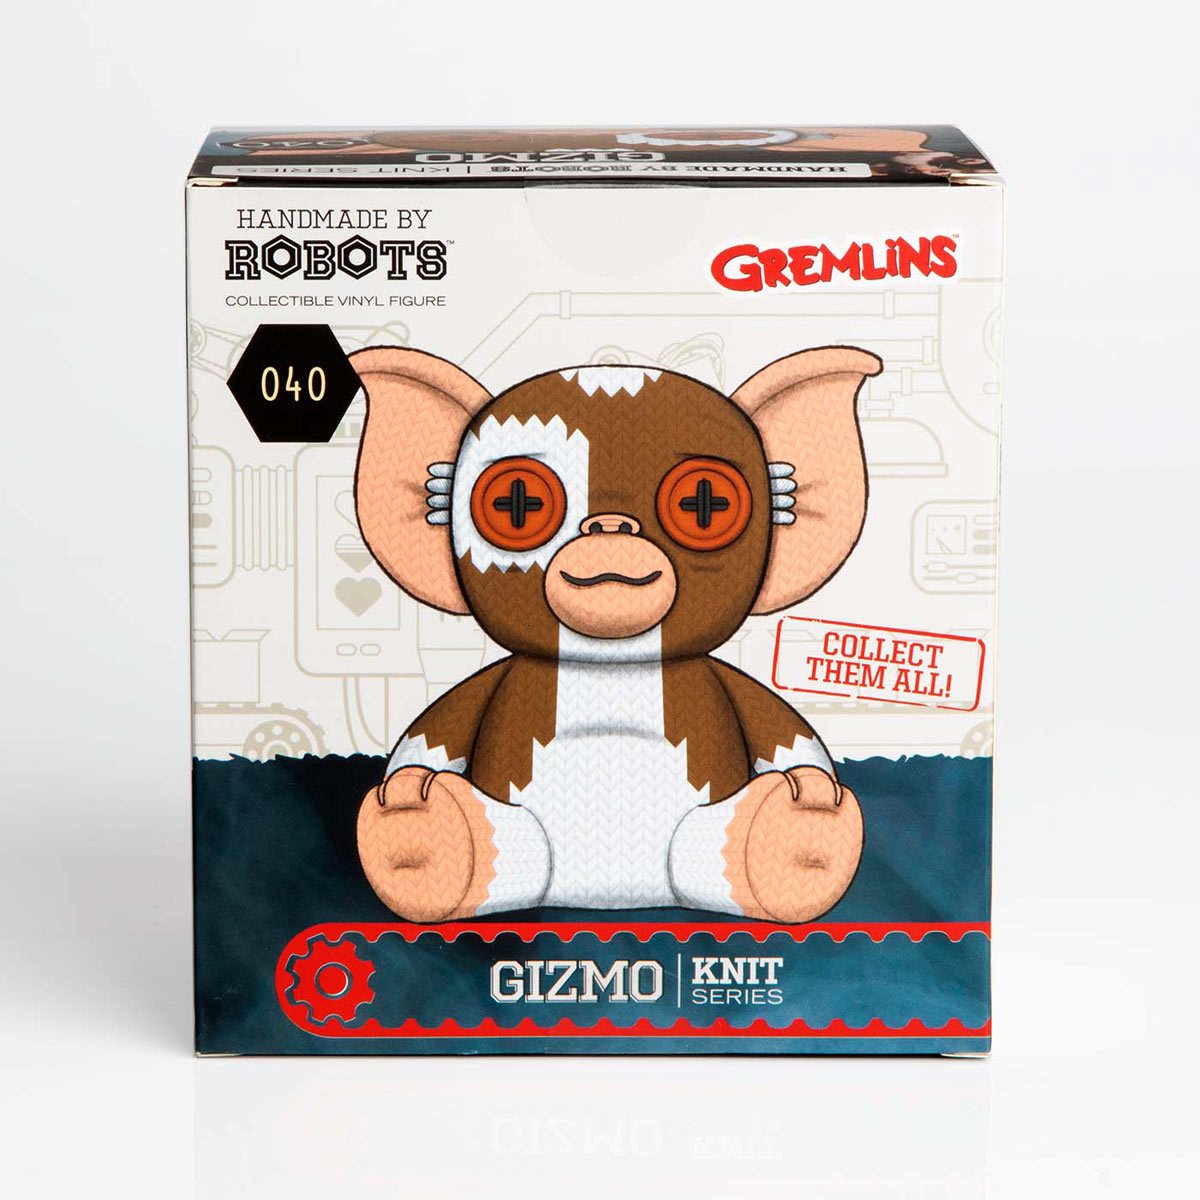 Gremlins - Gizmo Handmade By Robots Vinyl Figure